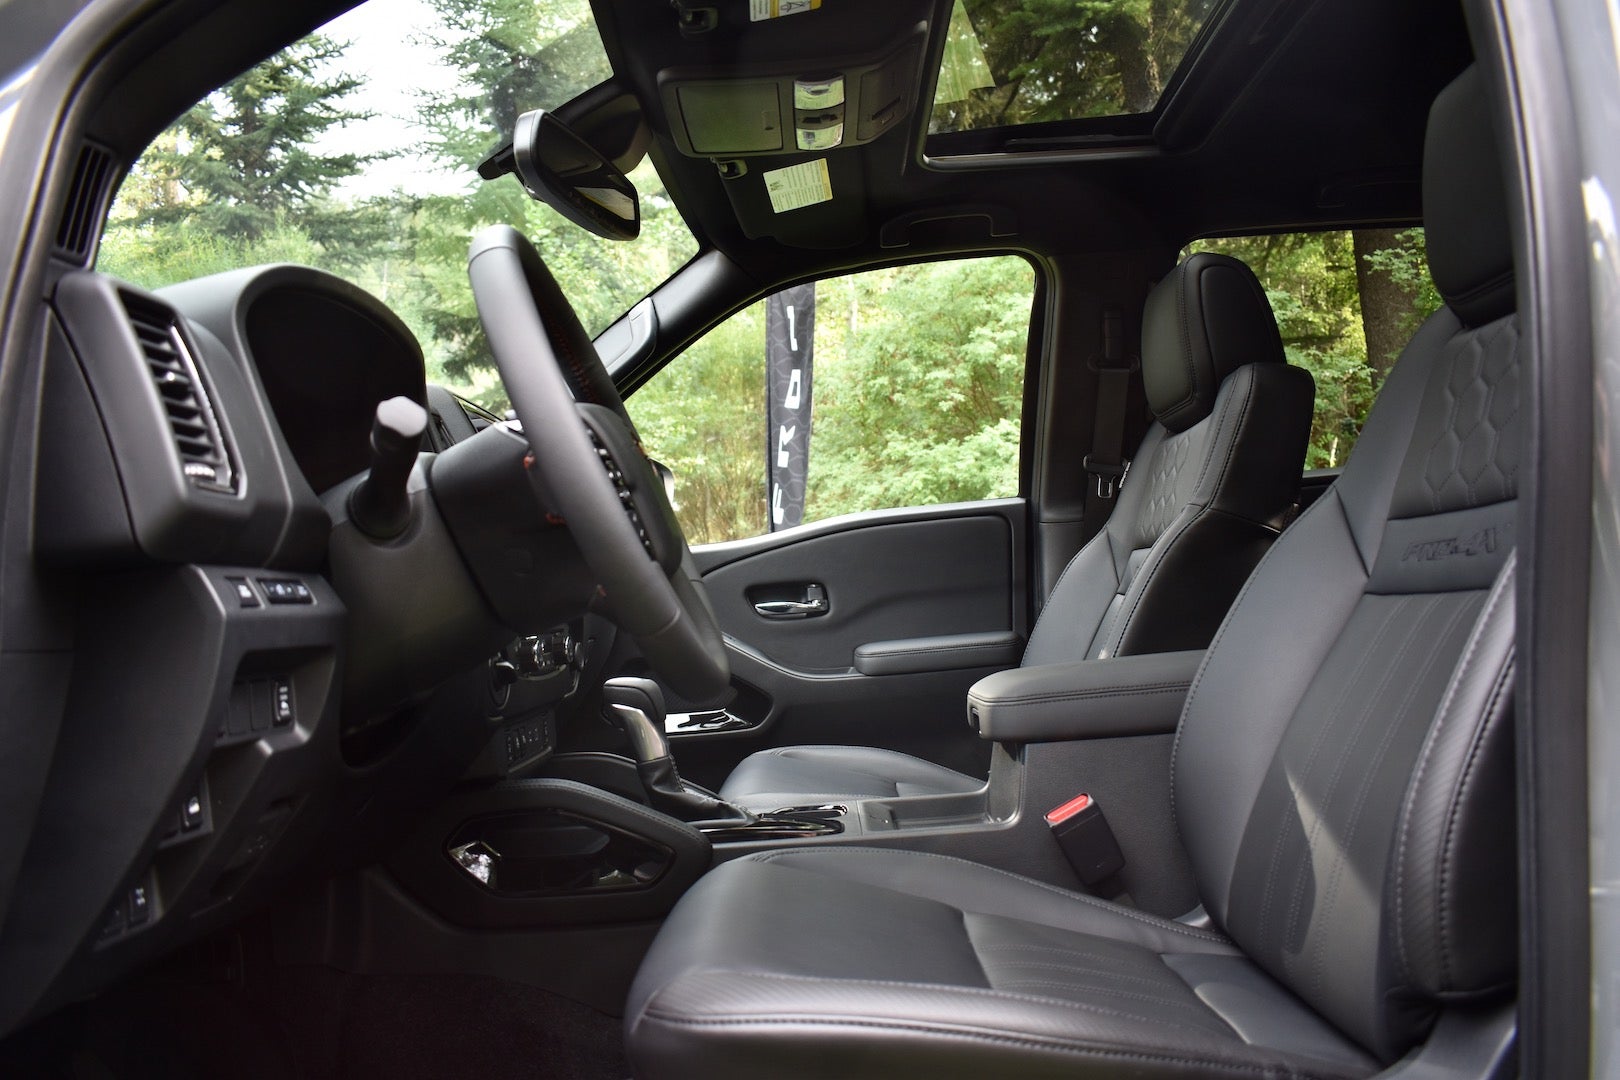 2022 Nissan Frontier Pro-4X interior, <i>James Gilboy</i>